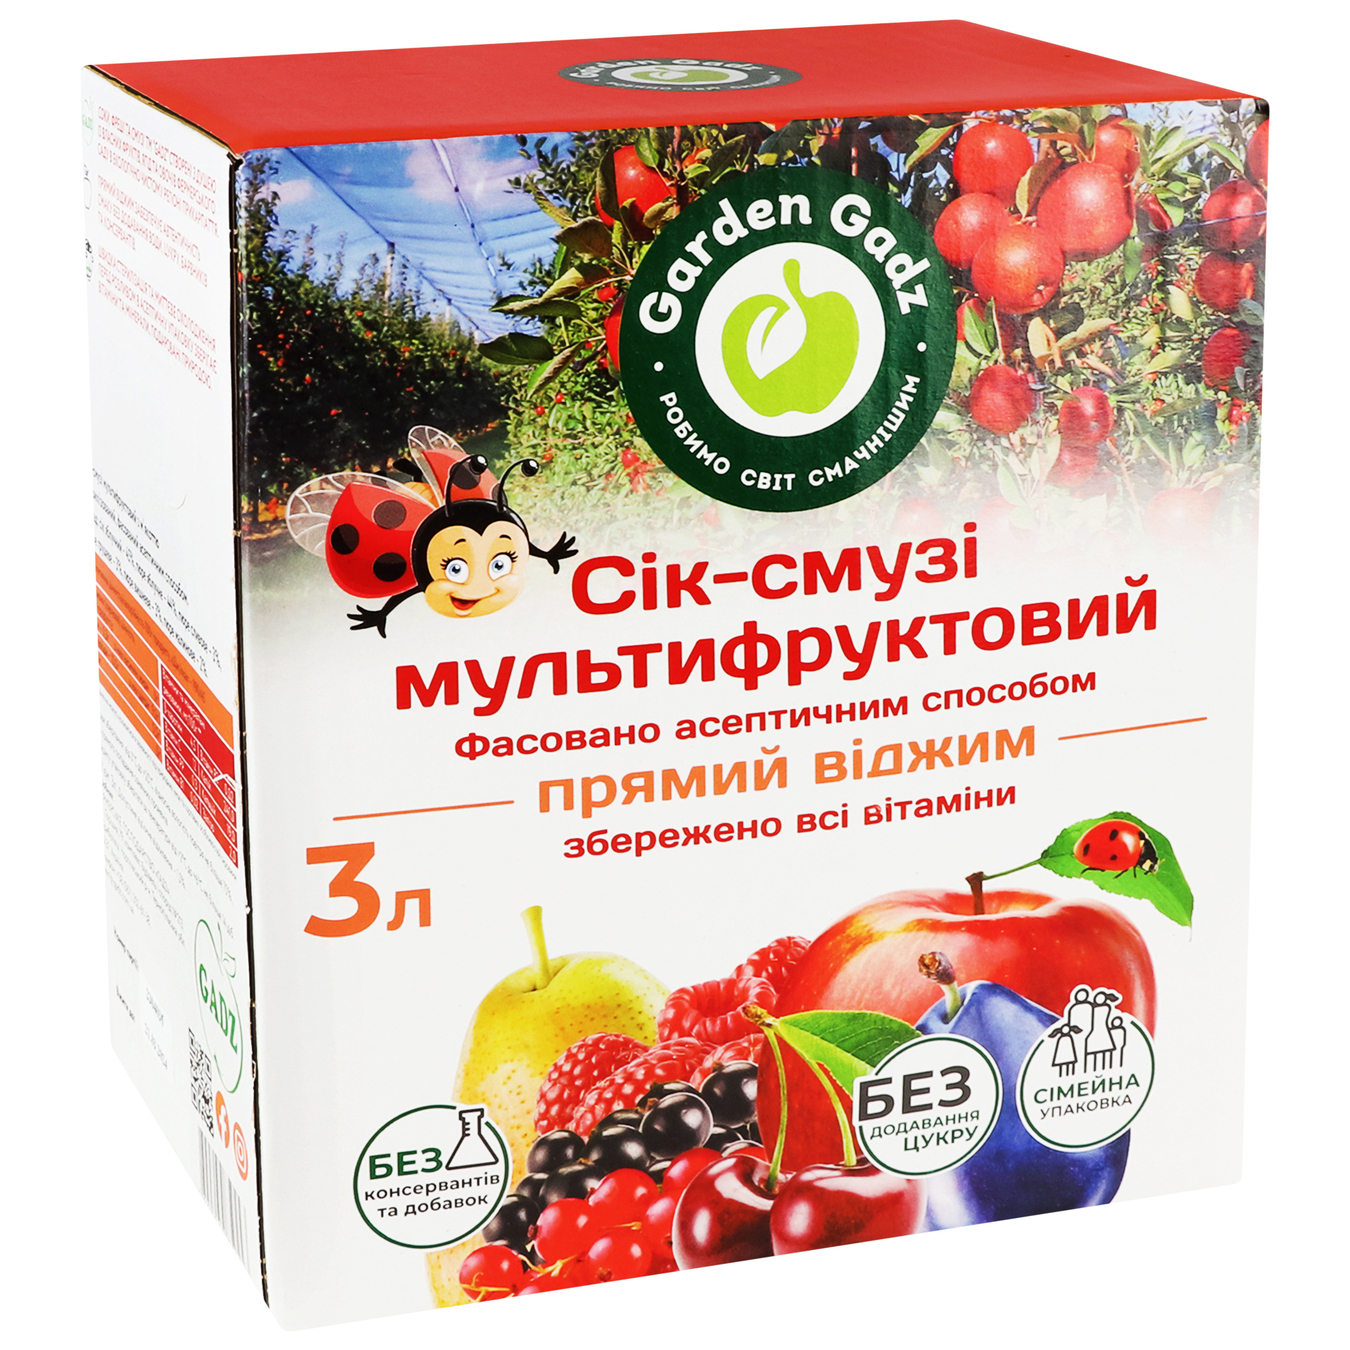 Gadz multi-fruit juice with pulp 3 liters 2